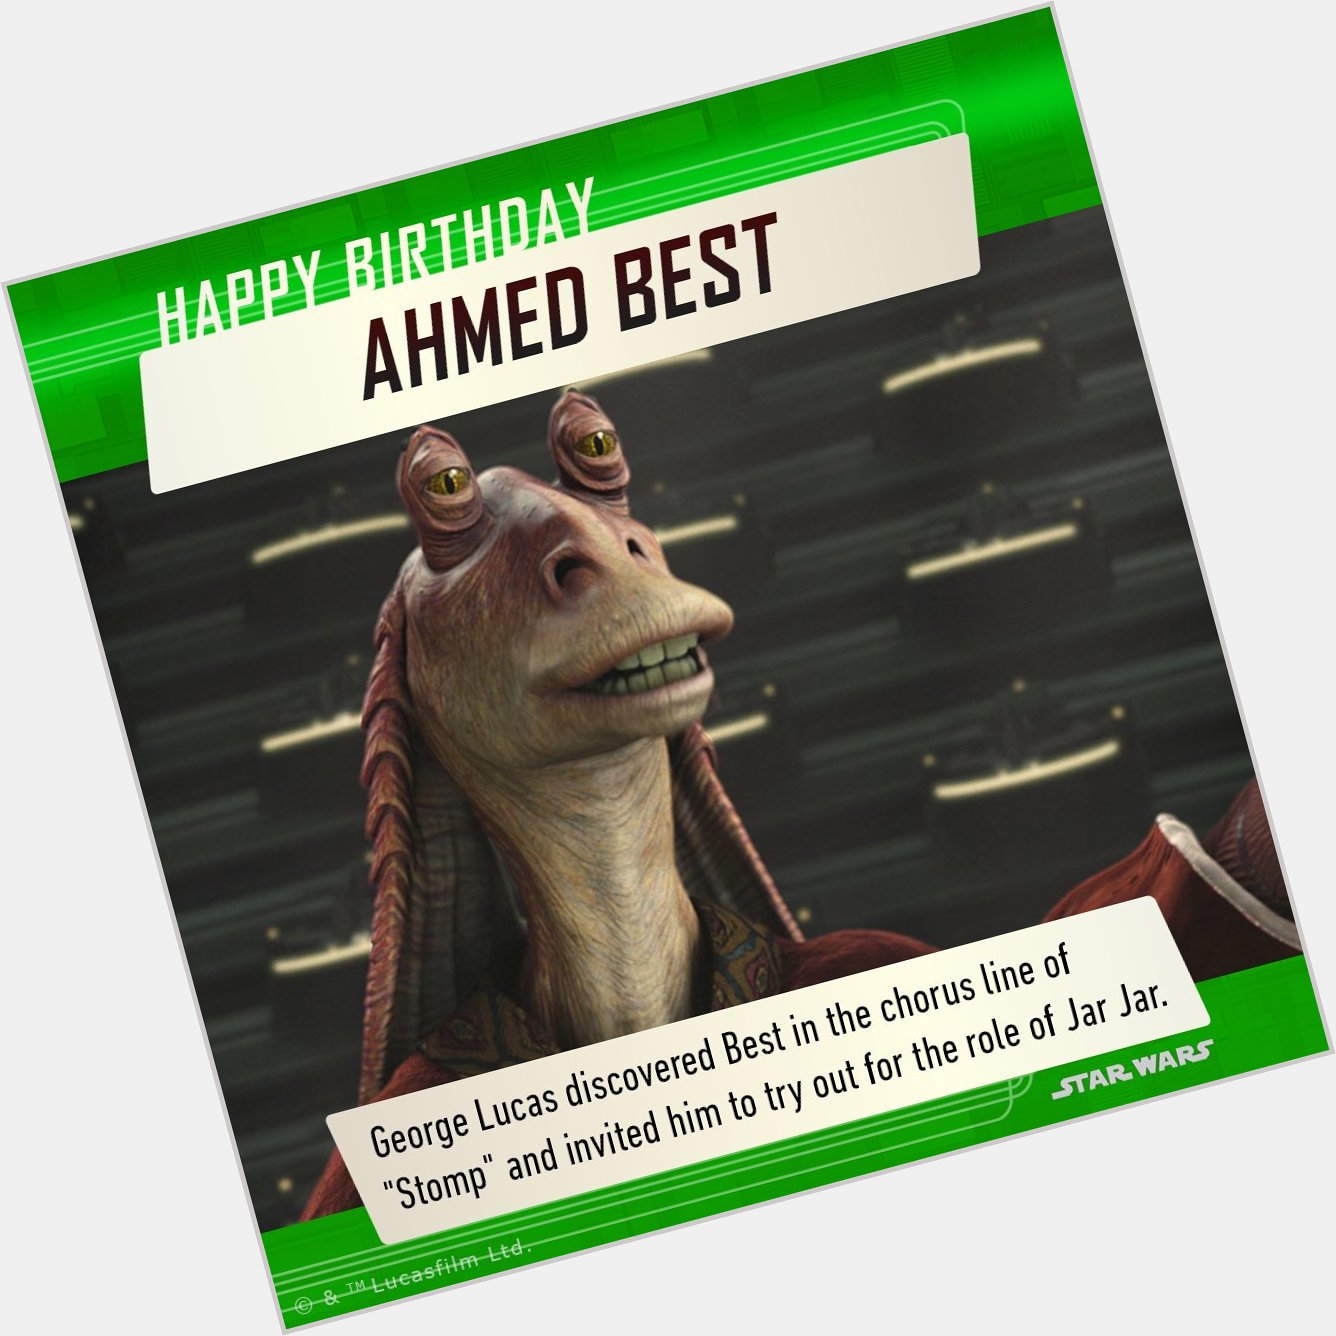 Happy Birthday Ahmed Best!  